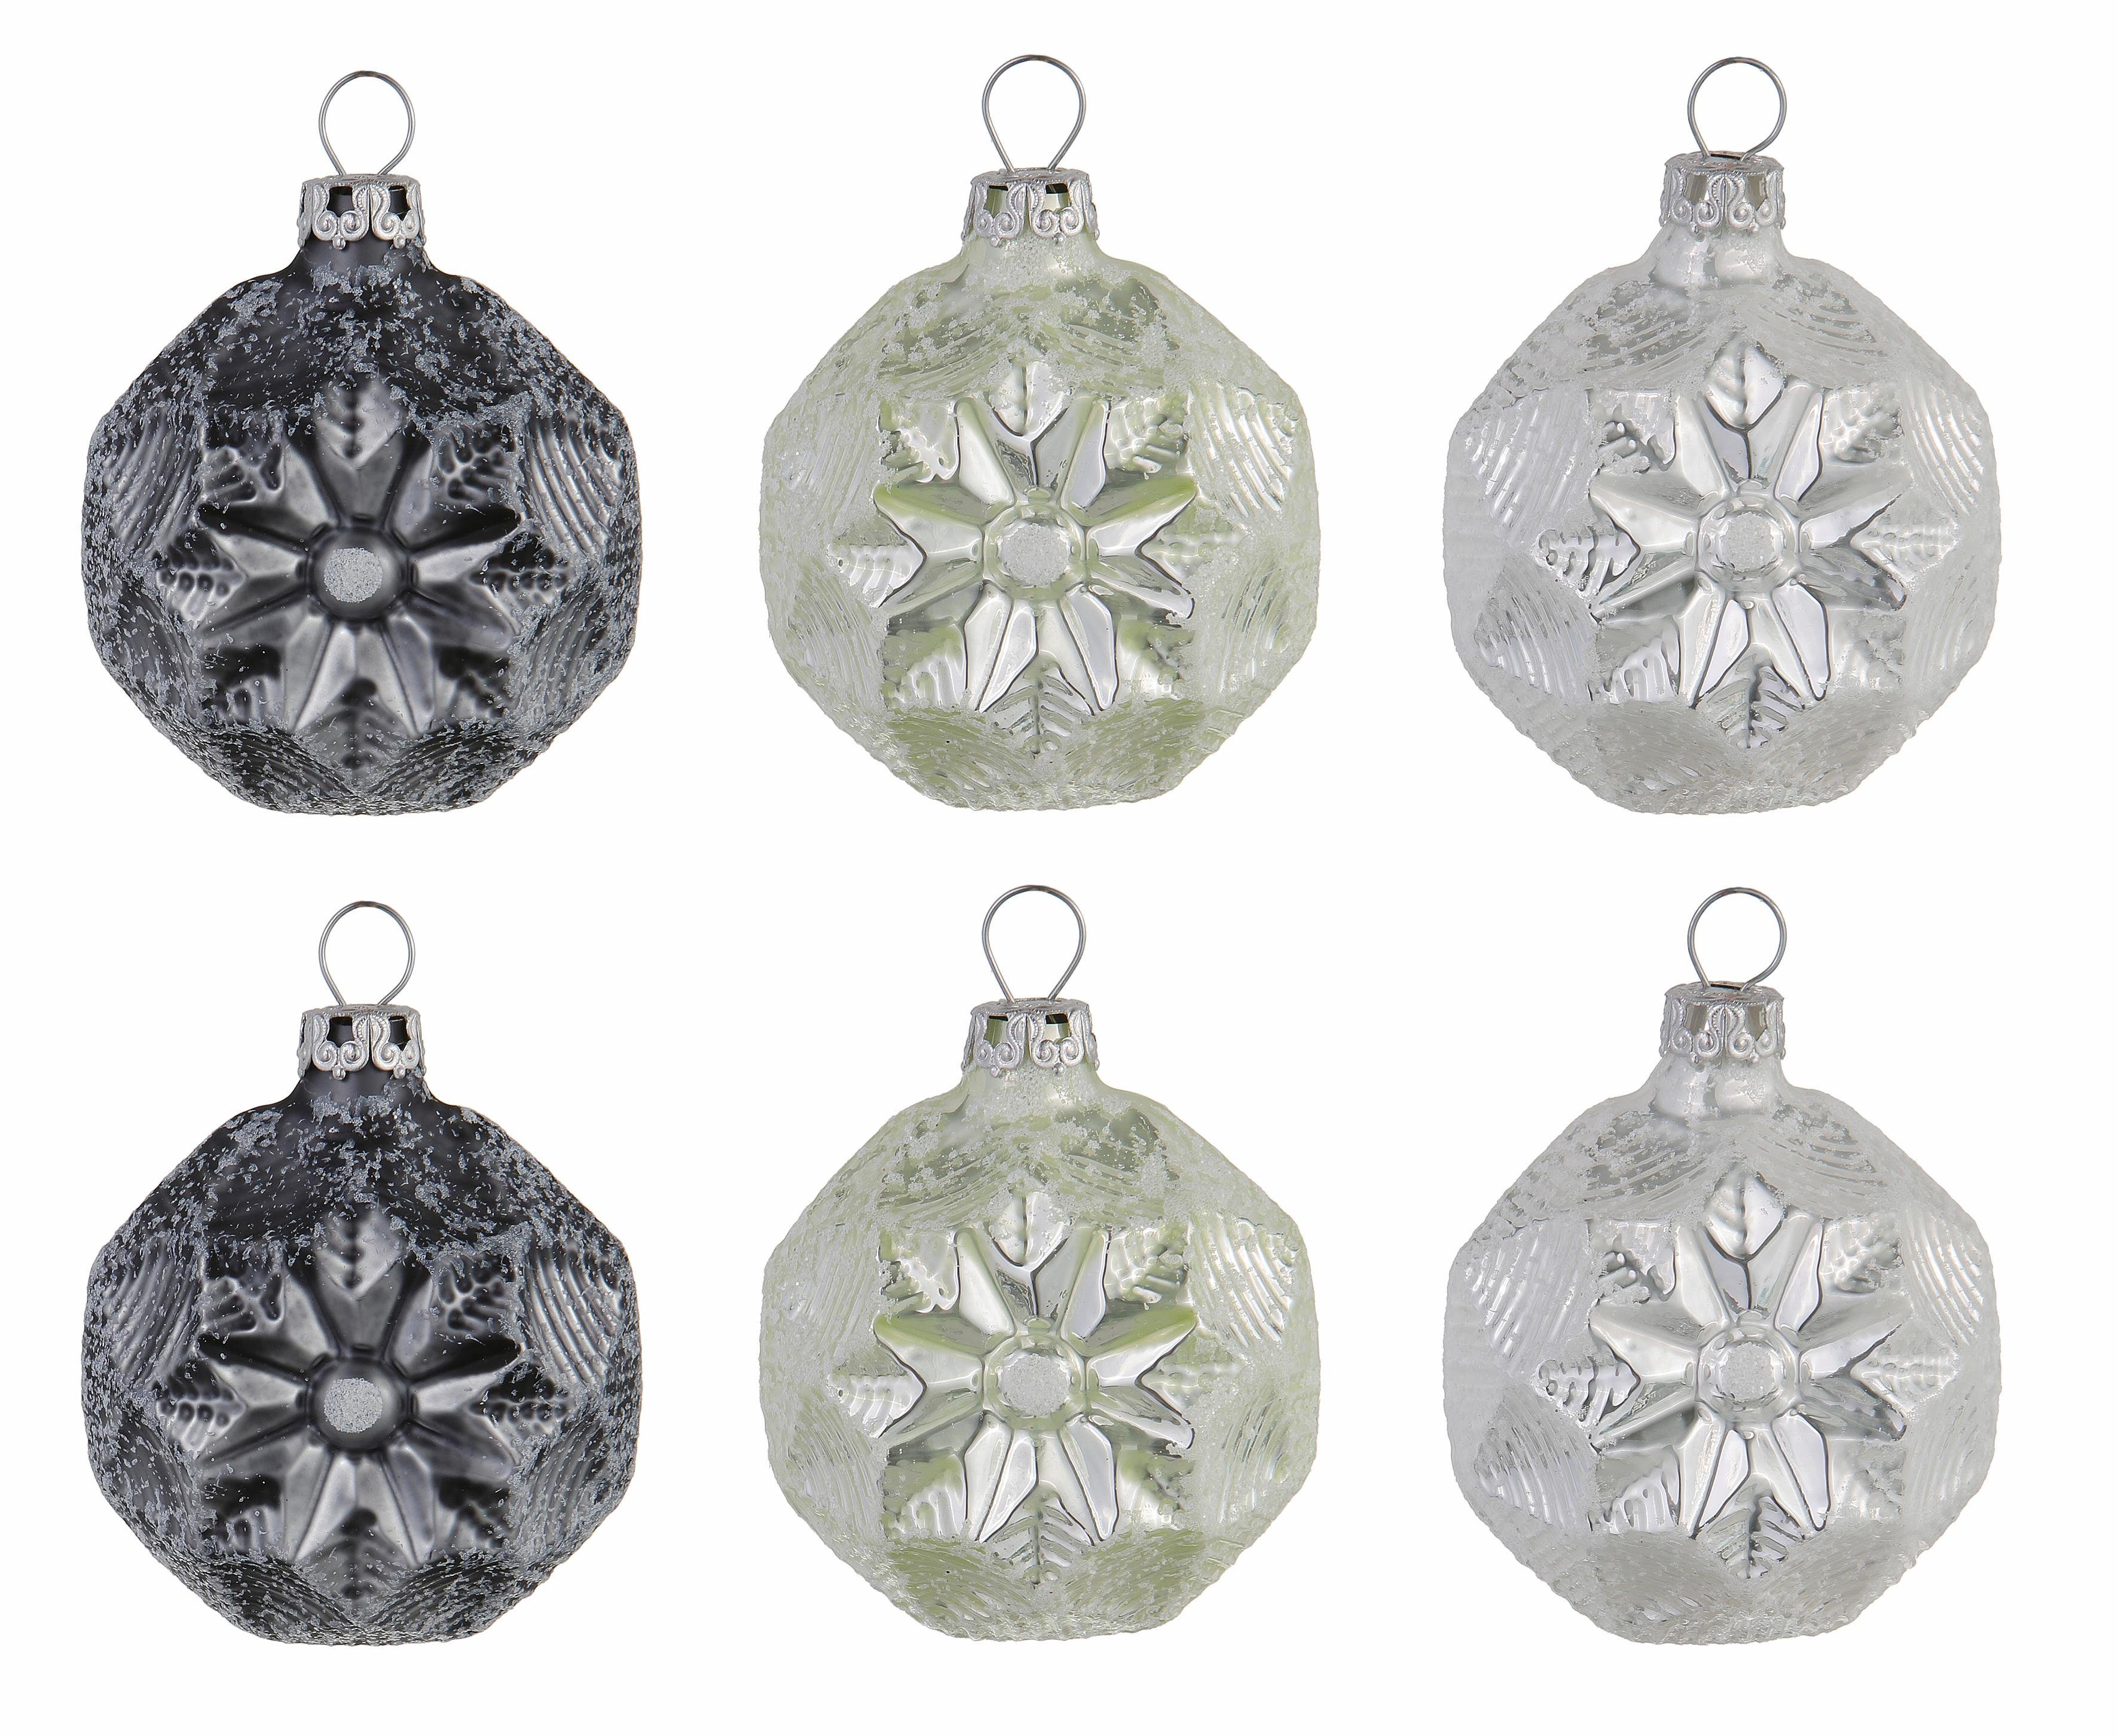 Thüringer Glasdesign Thüringer Glasdesign kerstversiering medaillon, made in Germany (set van 6), Frozen Christmas